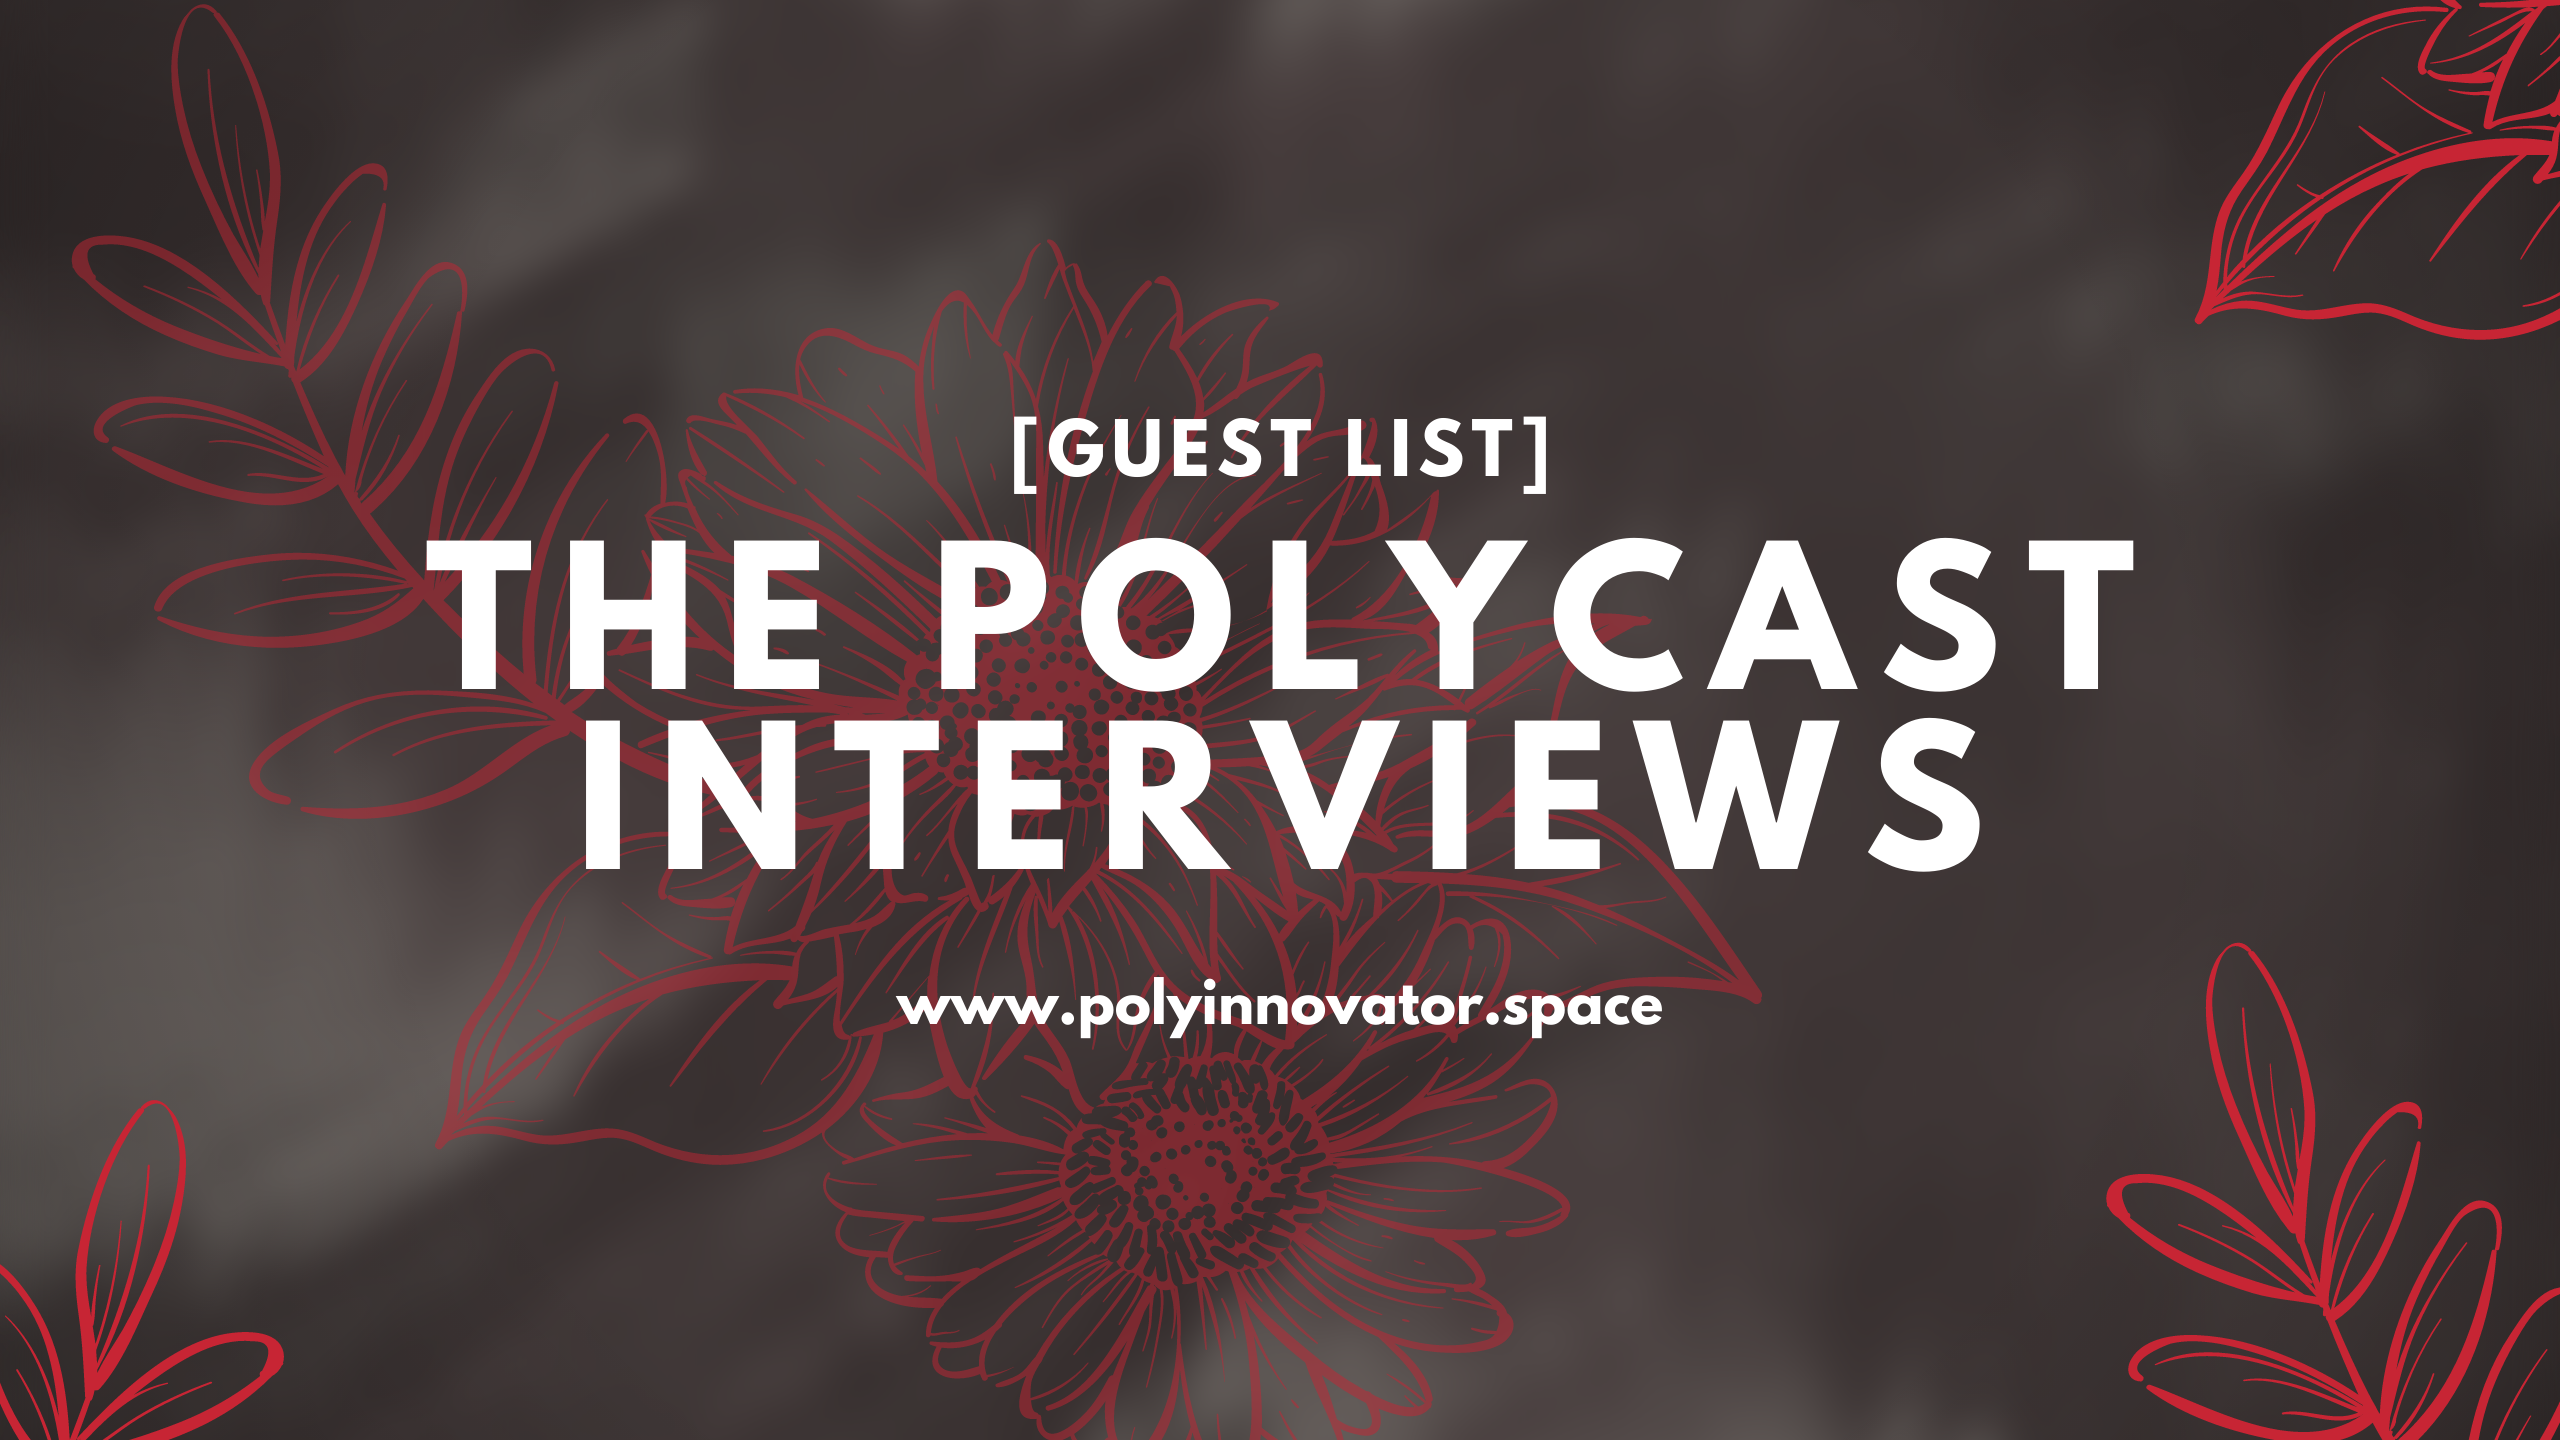 The PolyCast Interviews [Guest List]